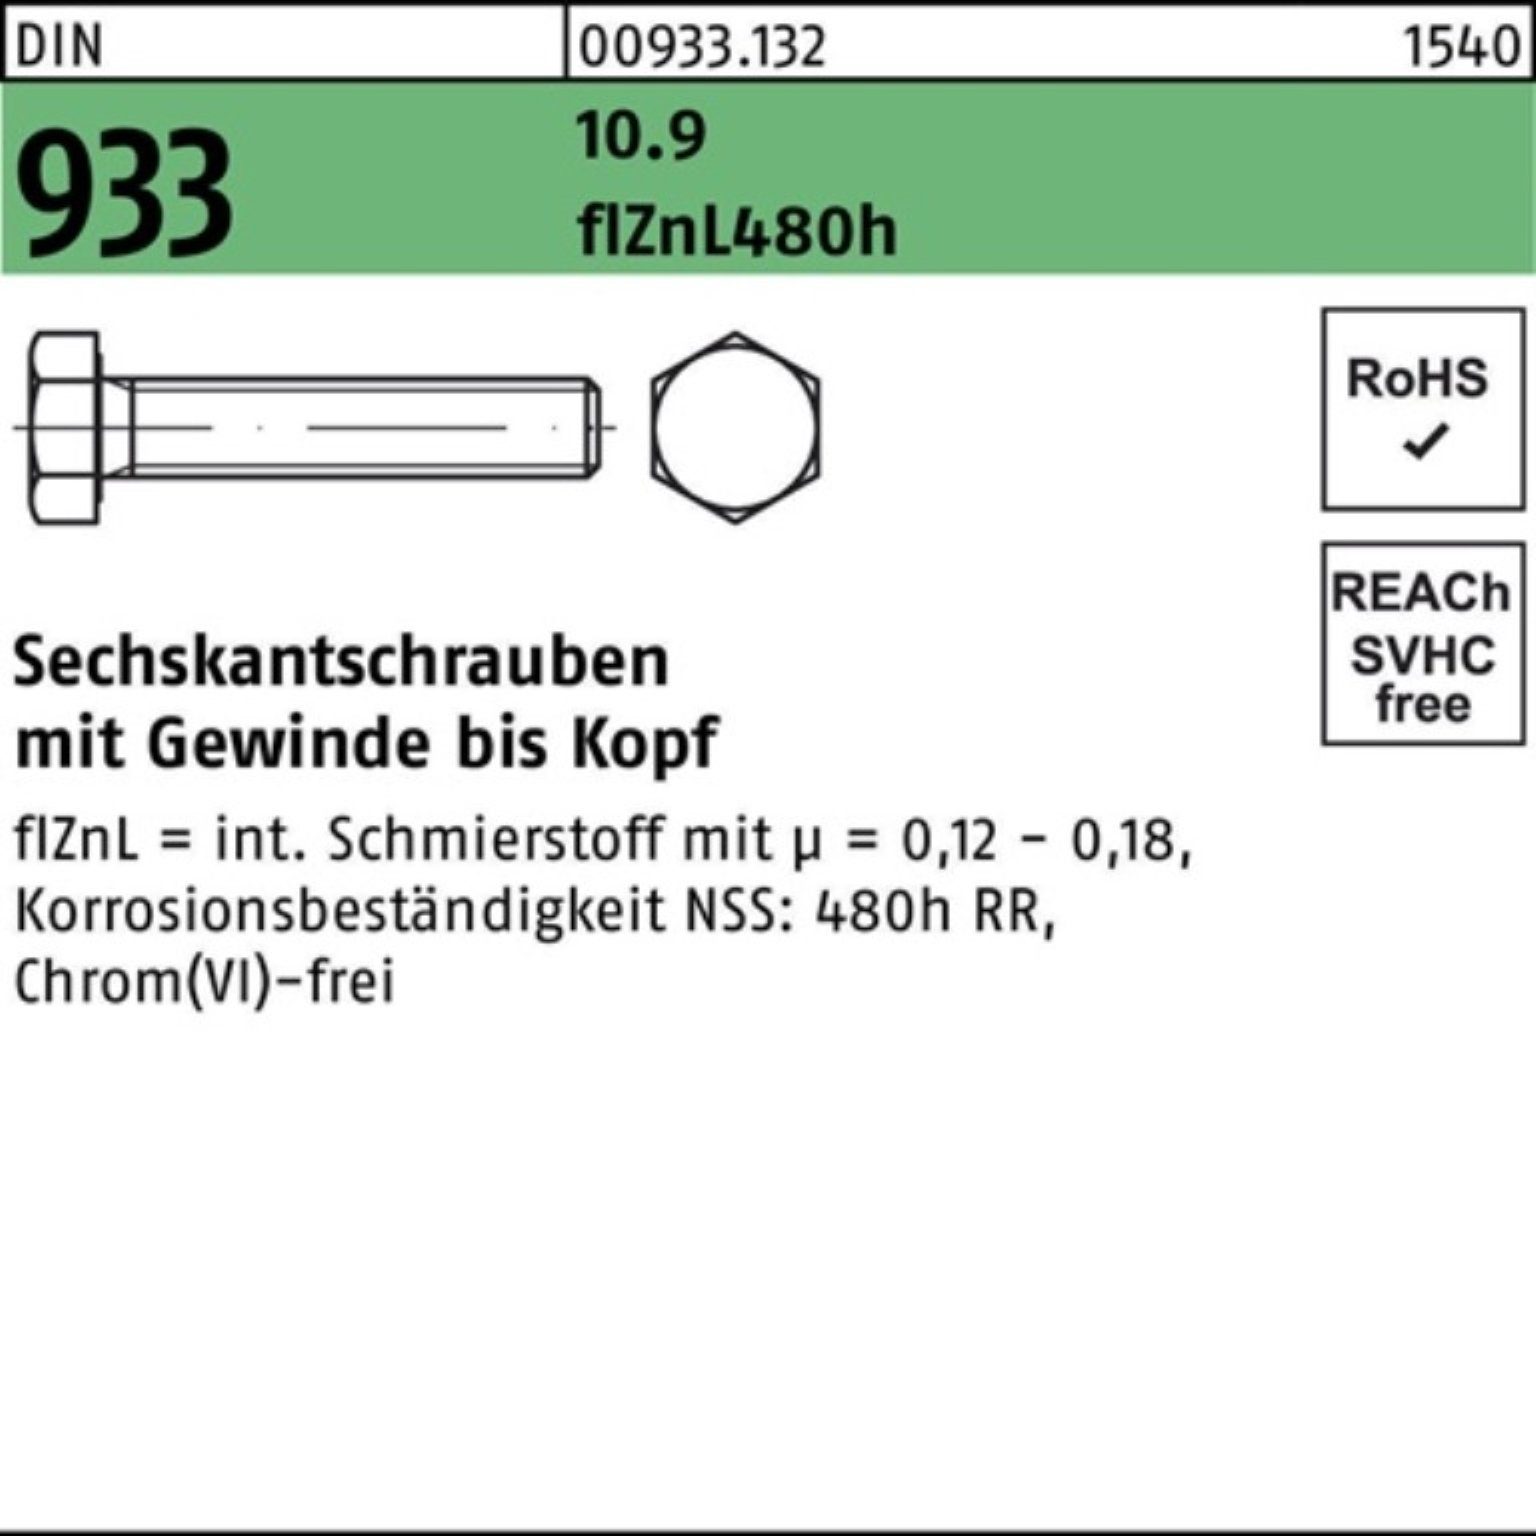 M20x Pack Sechskantschraube Reyher Sechskantschraube 55 VG DIN flZnL/nc/x/x/480h 100er 10.9 933